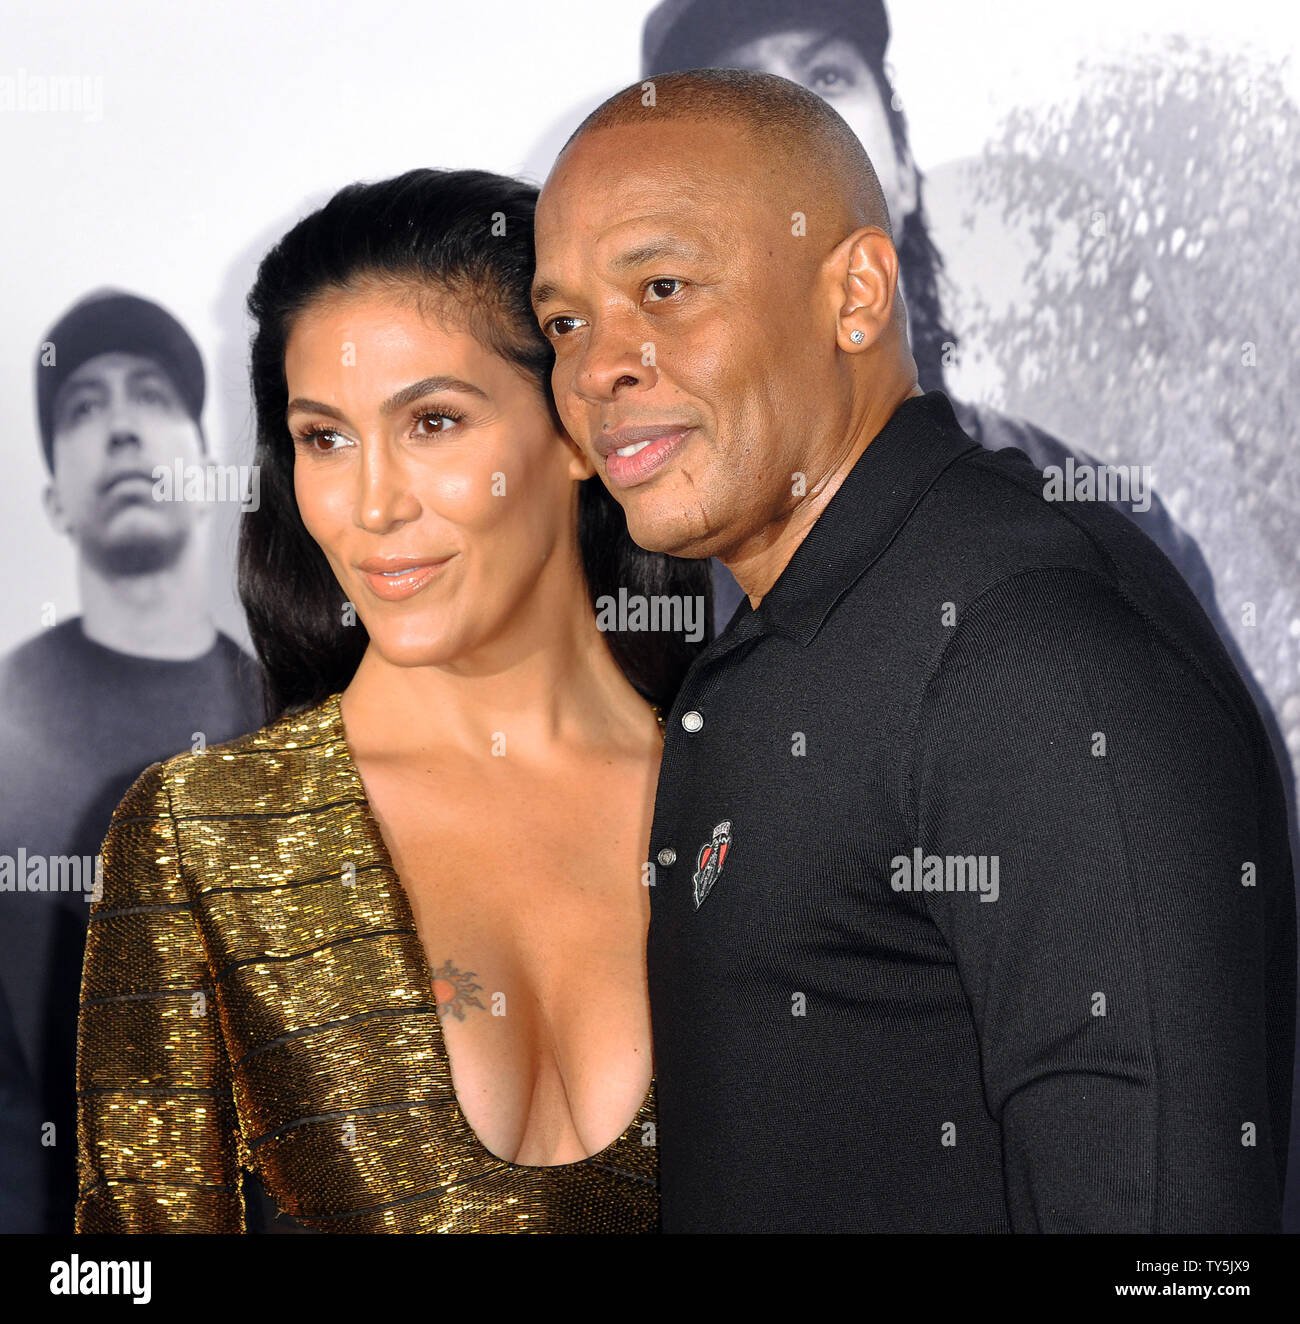 The Untold Truth of Rapper Dr. Dre's Wife - Nicole Threatt